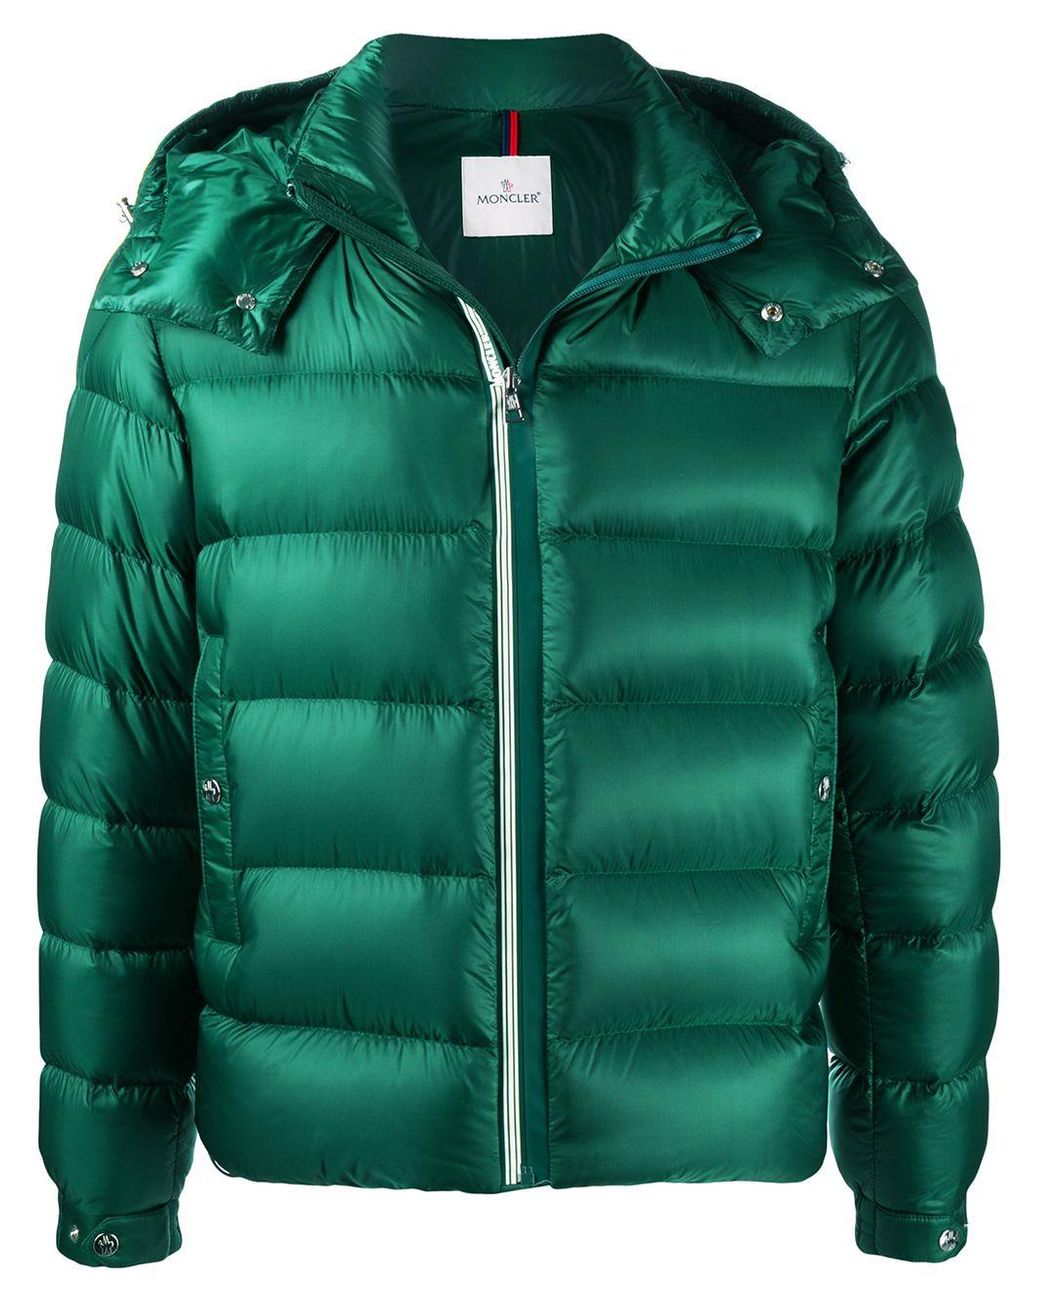 Moncler Detachable-hood Puffer Jacket in Green for Men - Lyst